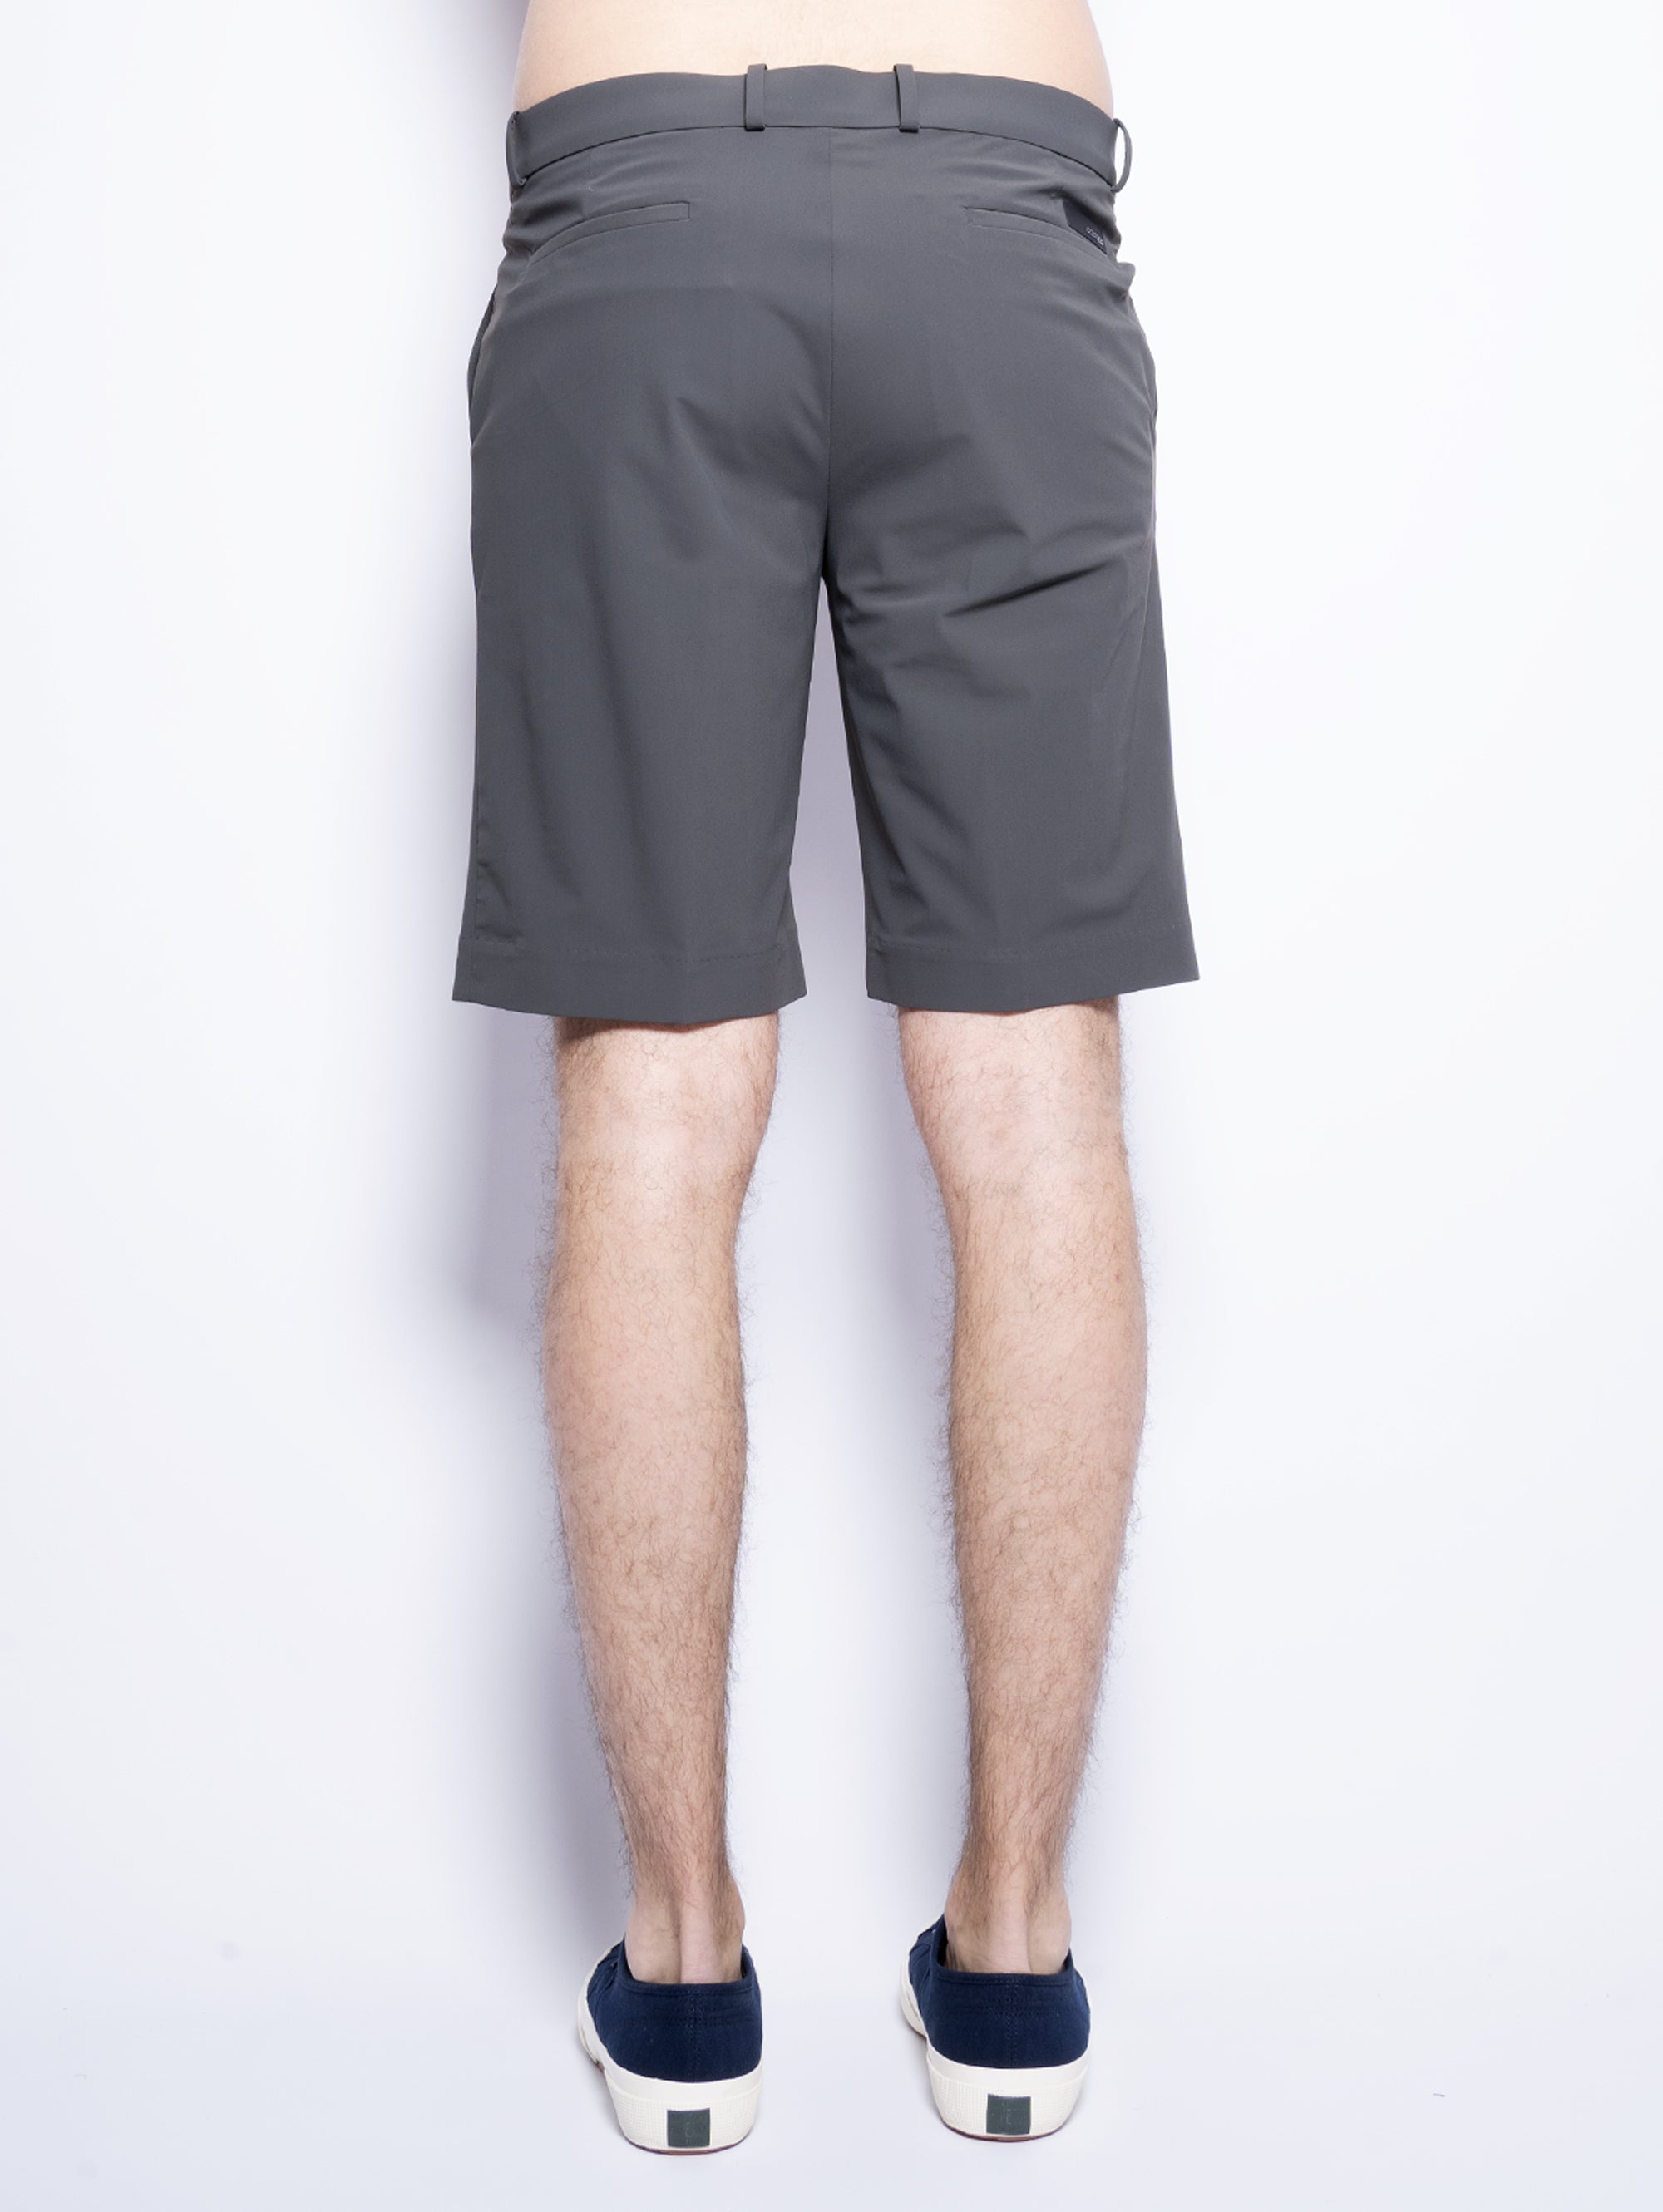 Bermuda shorts in Stretch Bosco fabric